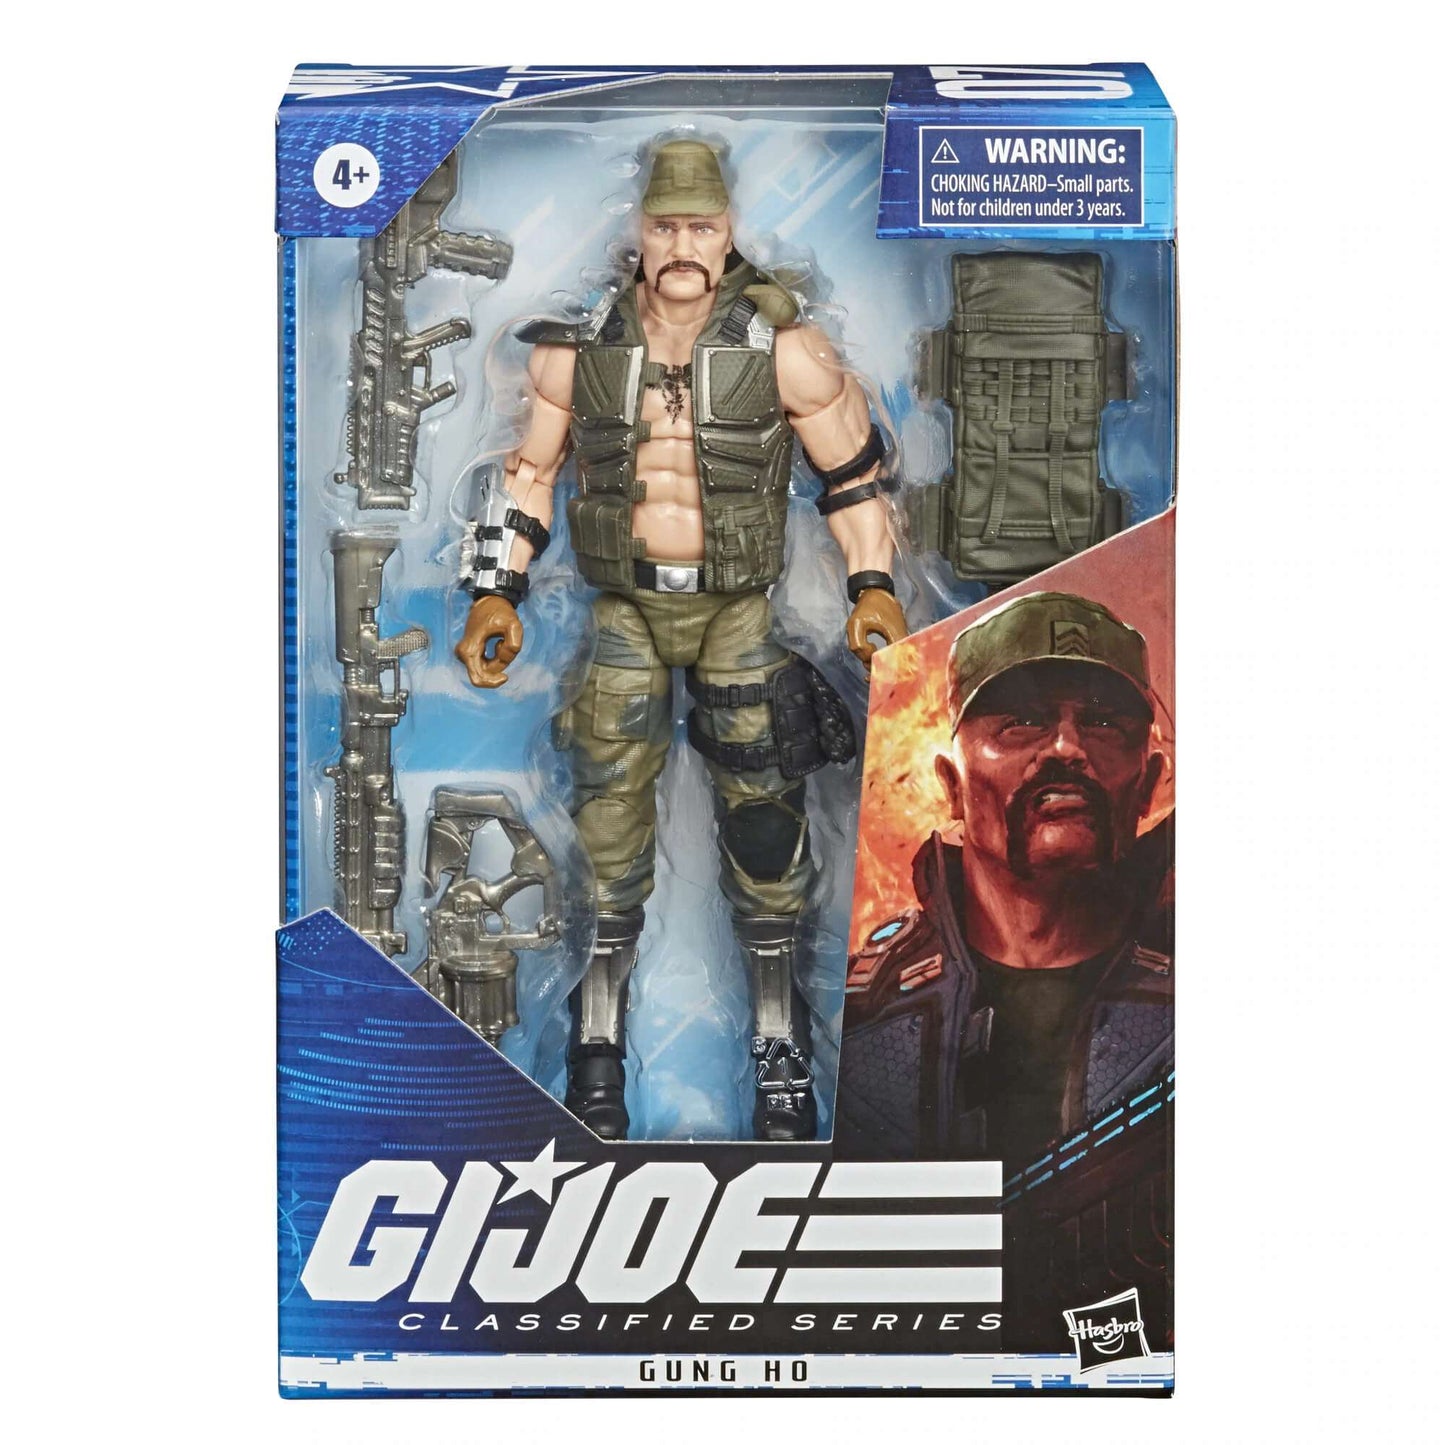 Hasbro G.I. Joe Classified Series Gung Ho action figure in packaging